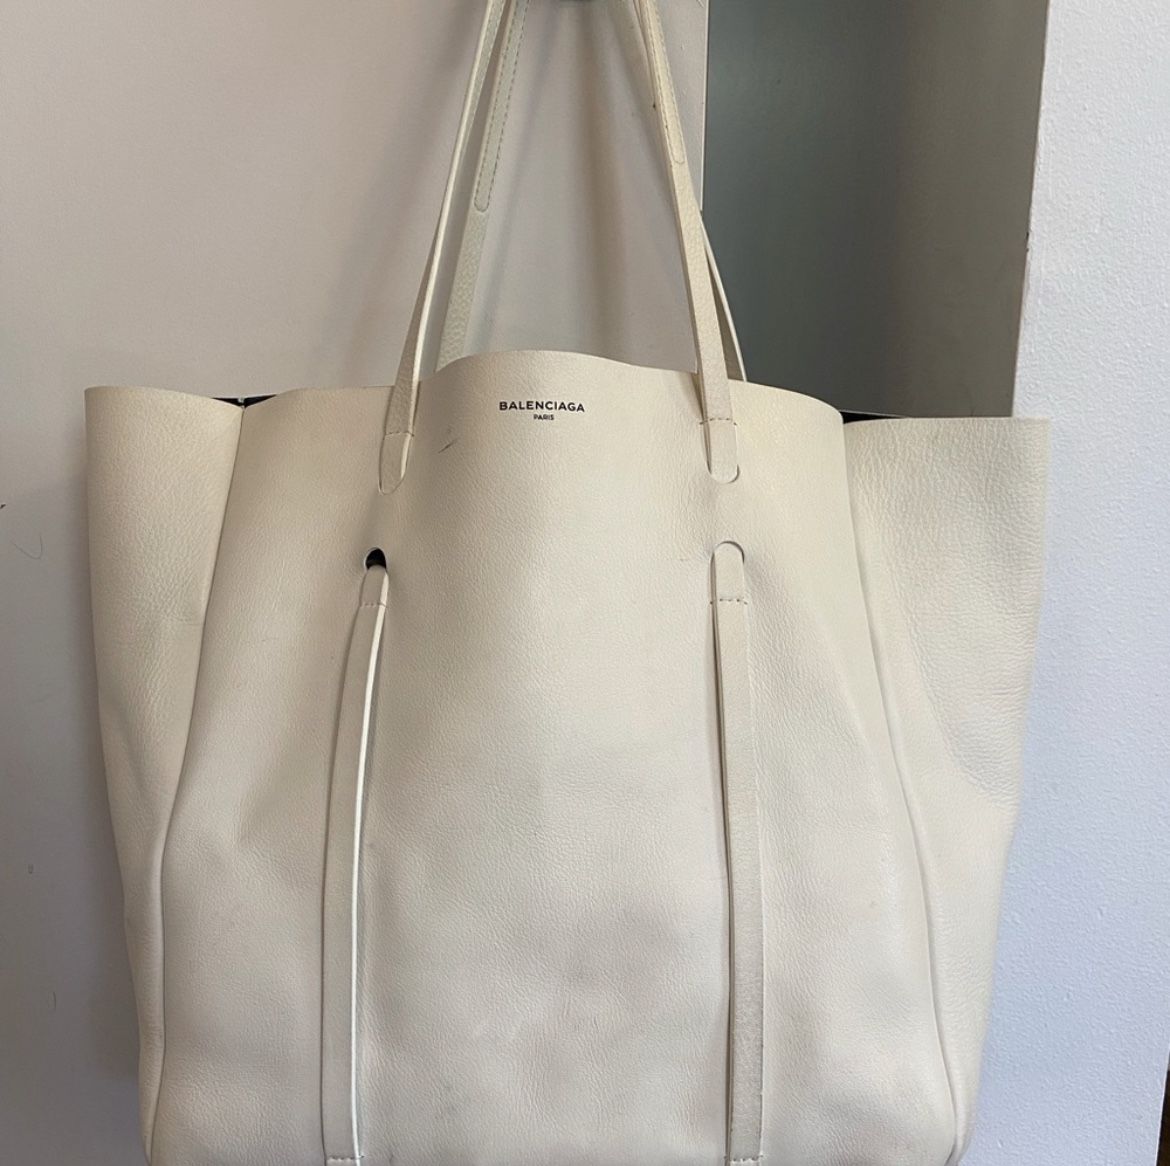 Balenciaga Tote Bag for Wichita, KS - OfferUp